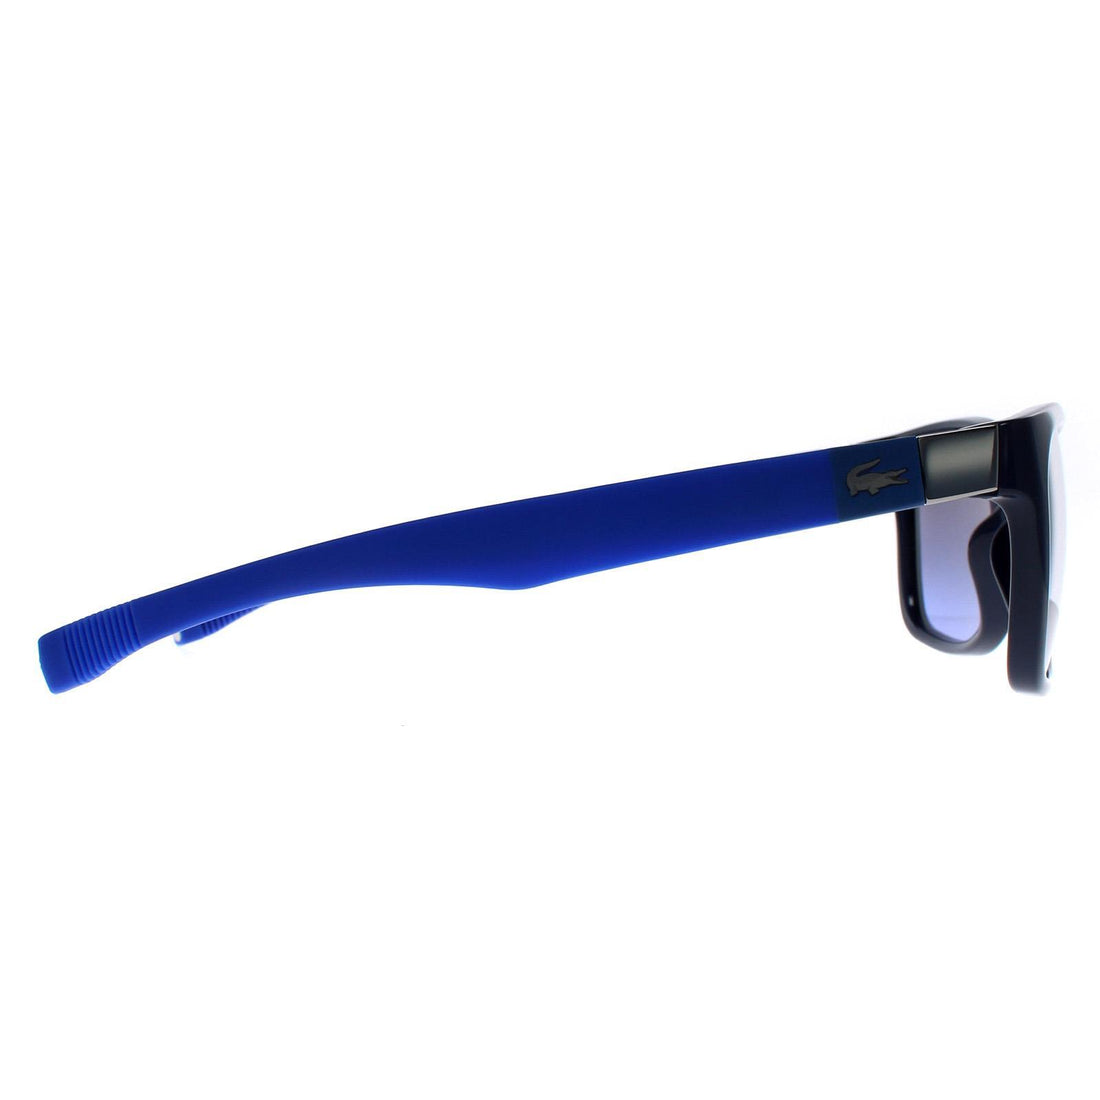 Lacoste Sunglasses L662S 424 Blue Smoke Grey